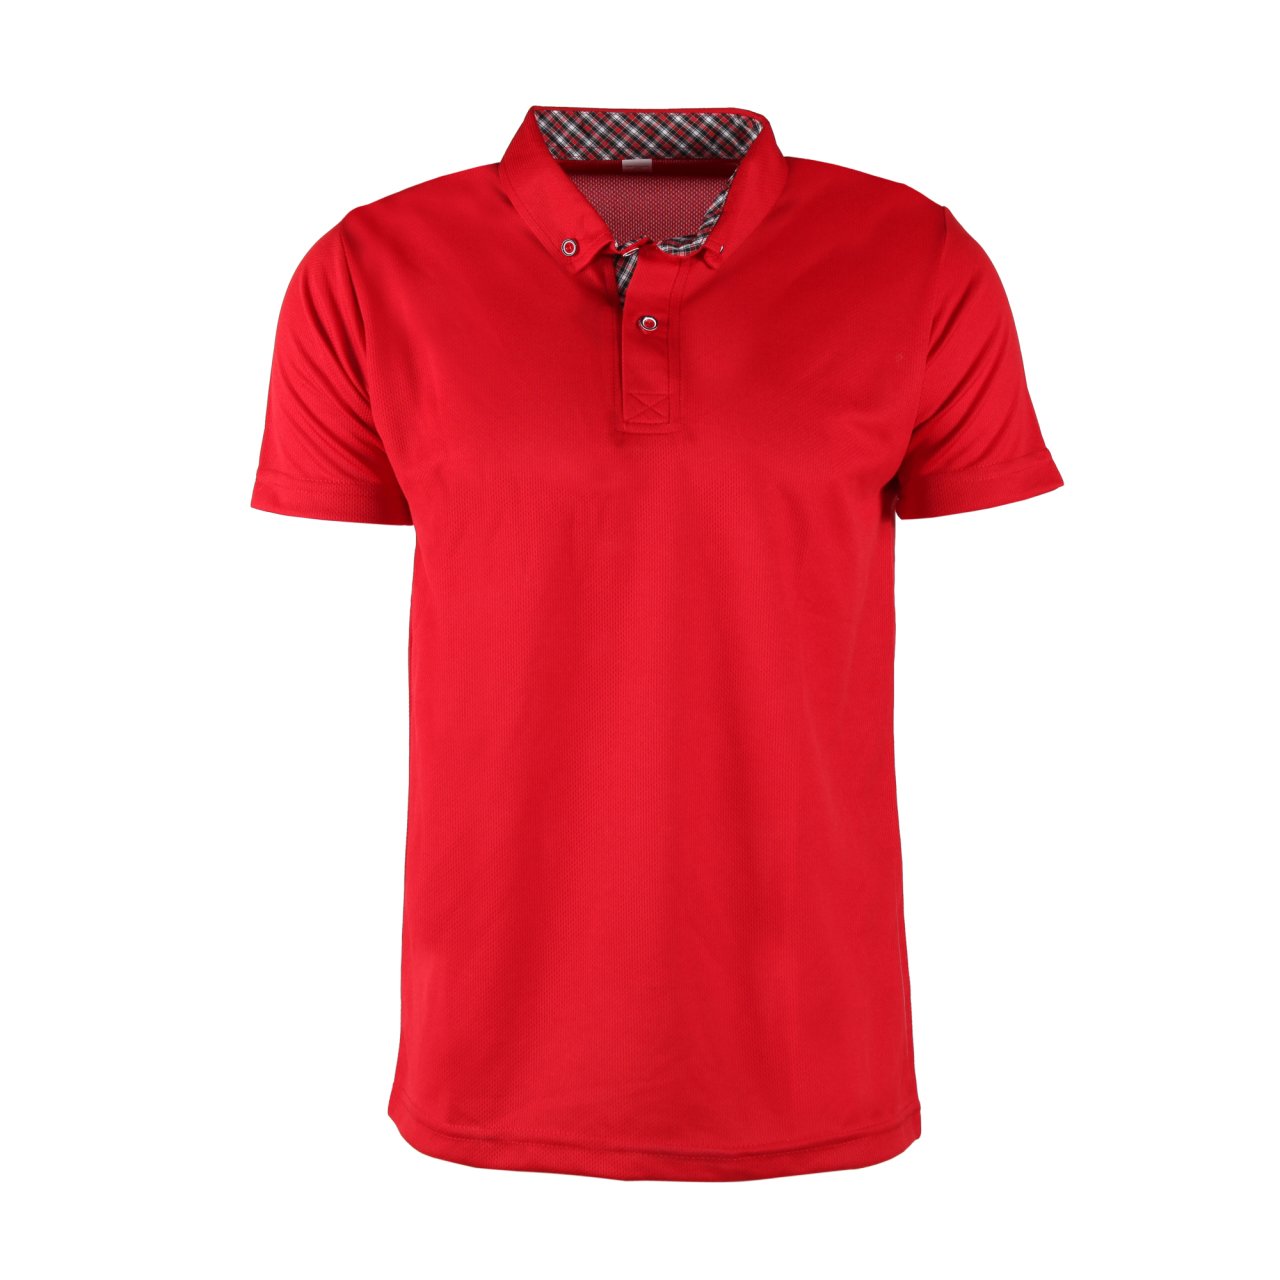 Kırmızı Gömlek Yaka Dry Touch T-Shirt